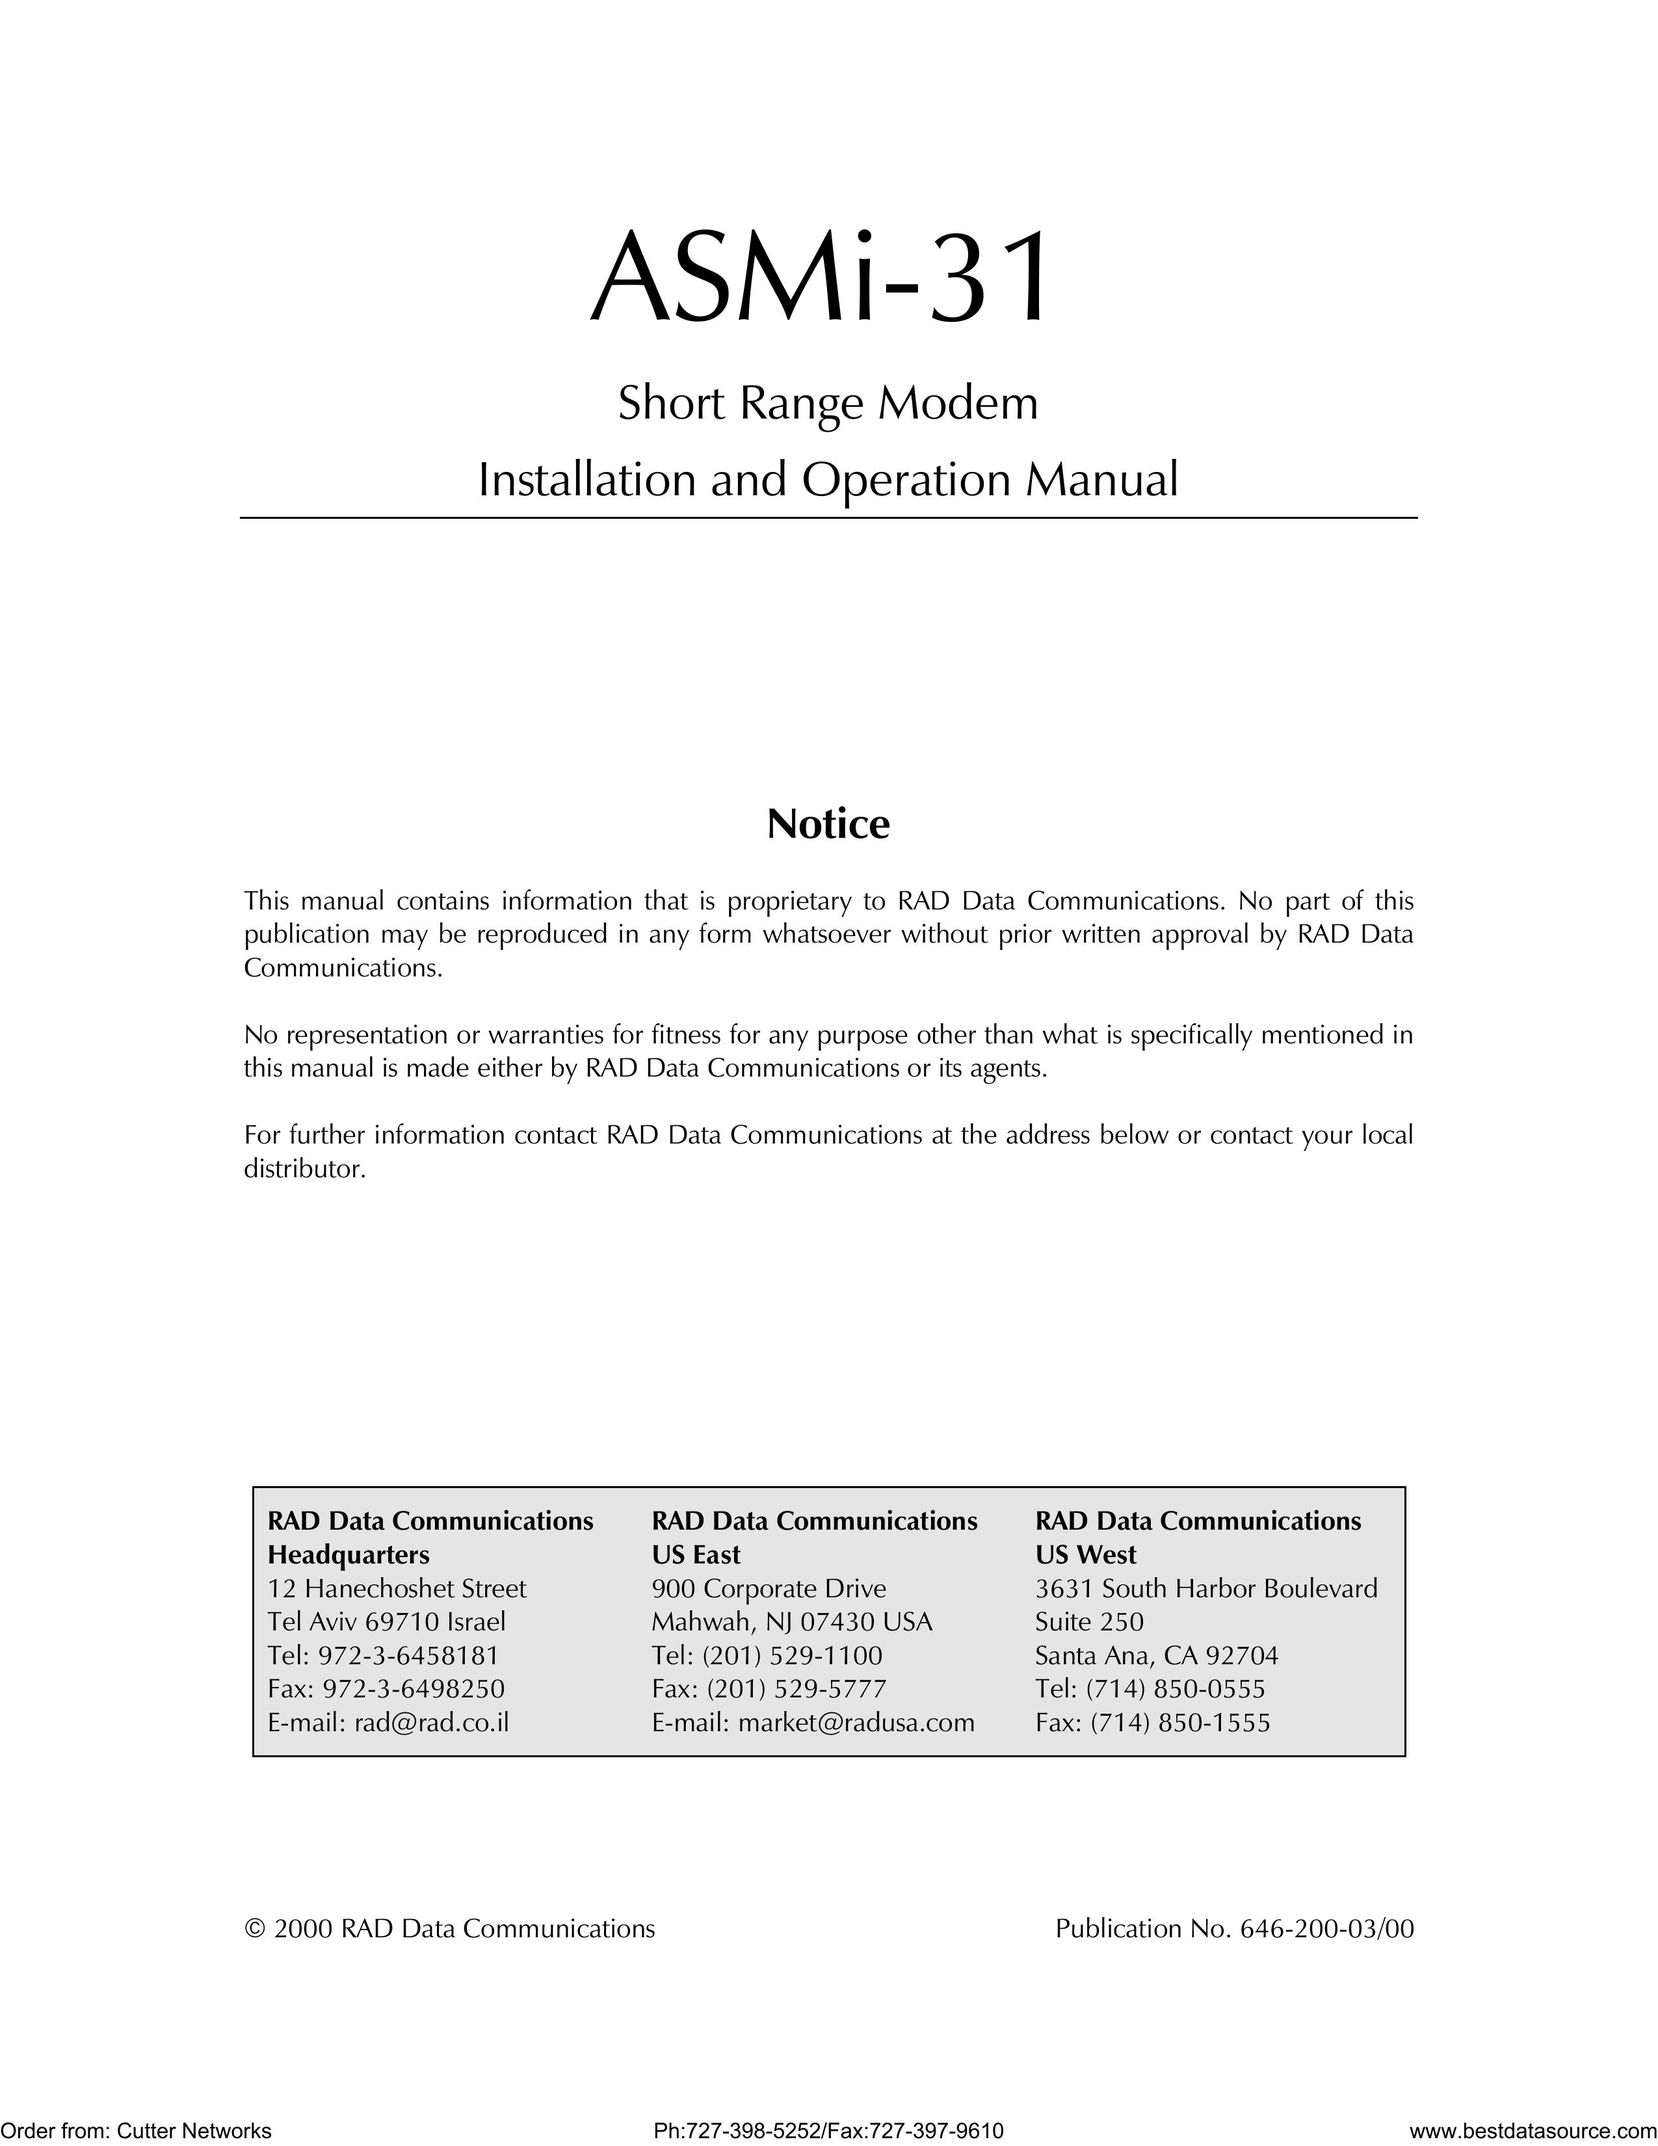 RAD Data comm ASMi-31 Network Card User Manual